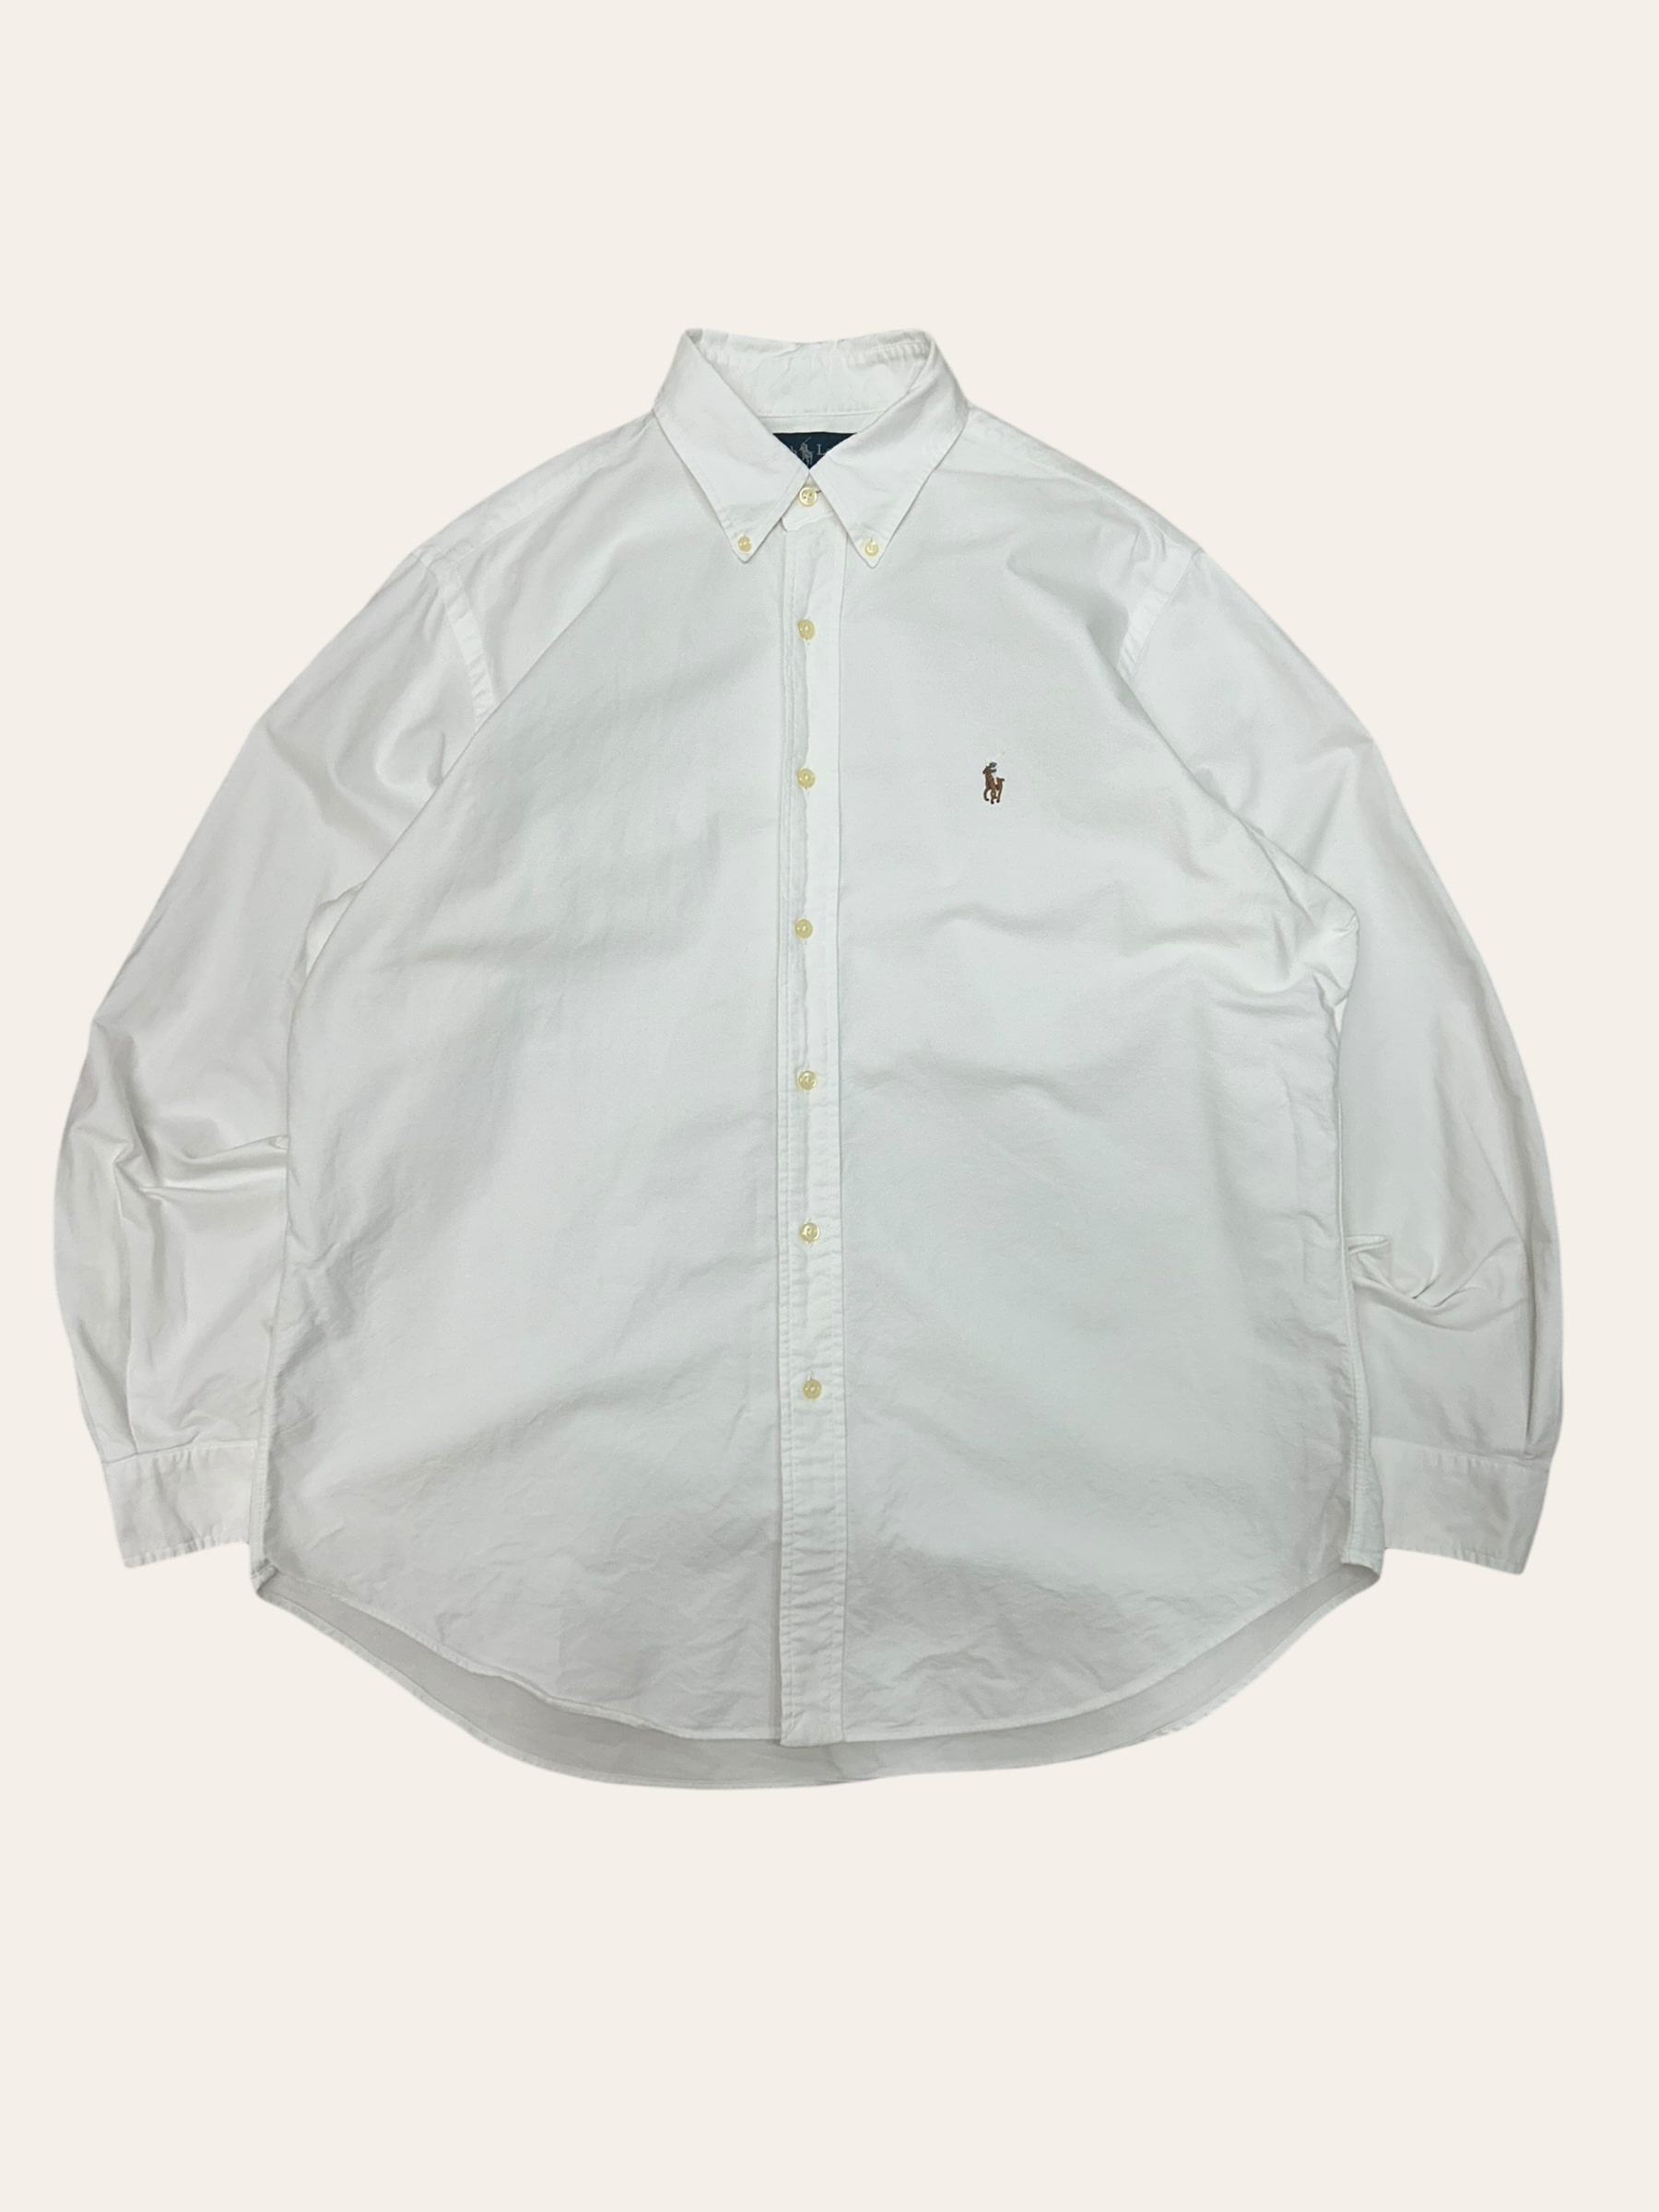 (From USA)Polo ralph lauren white oxford shirt 16.5